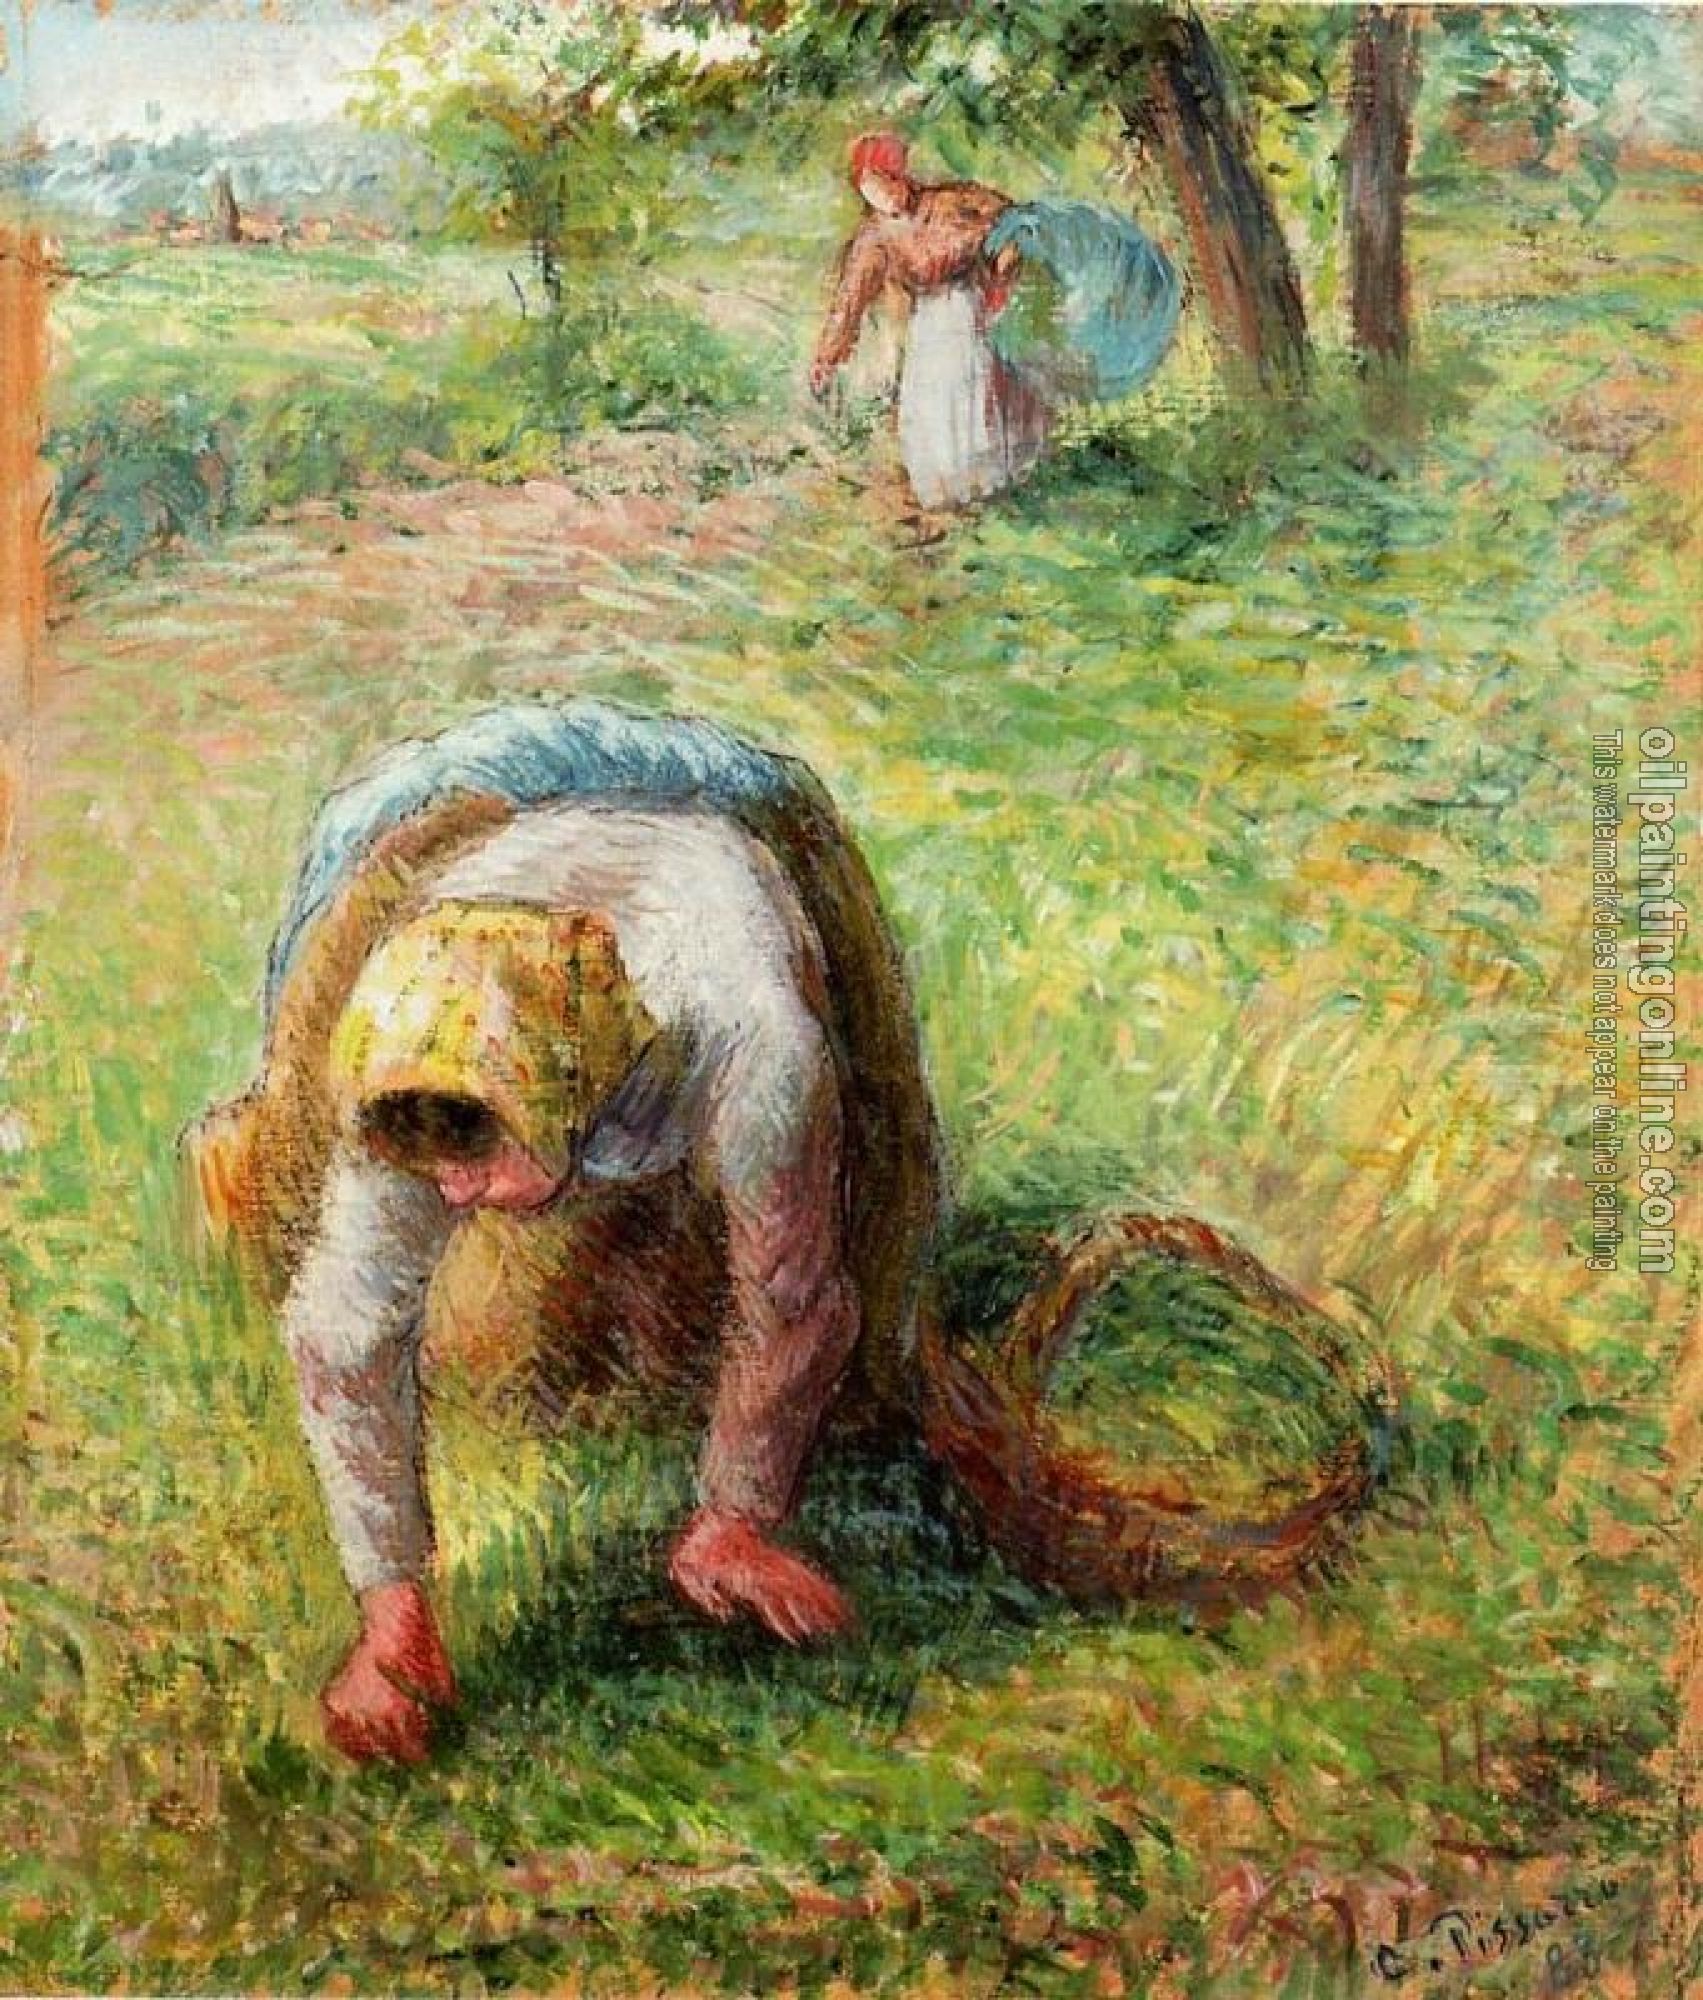 Pissarro, Camille - Peasants Gathering Grass